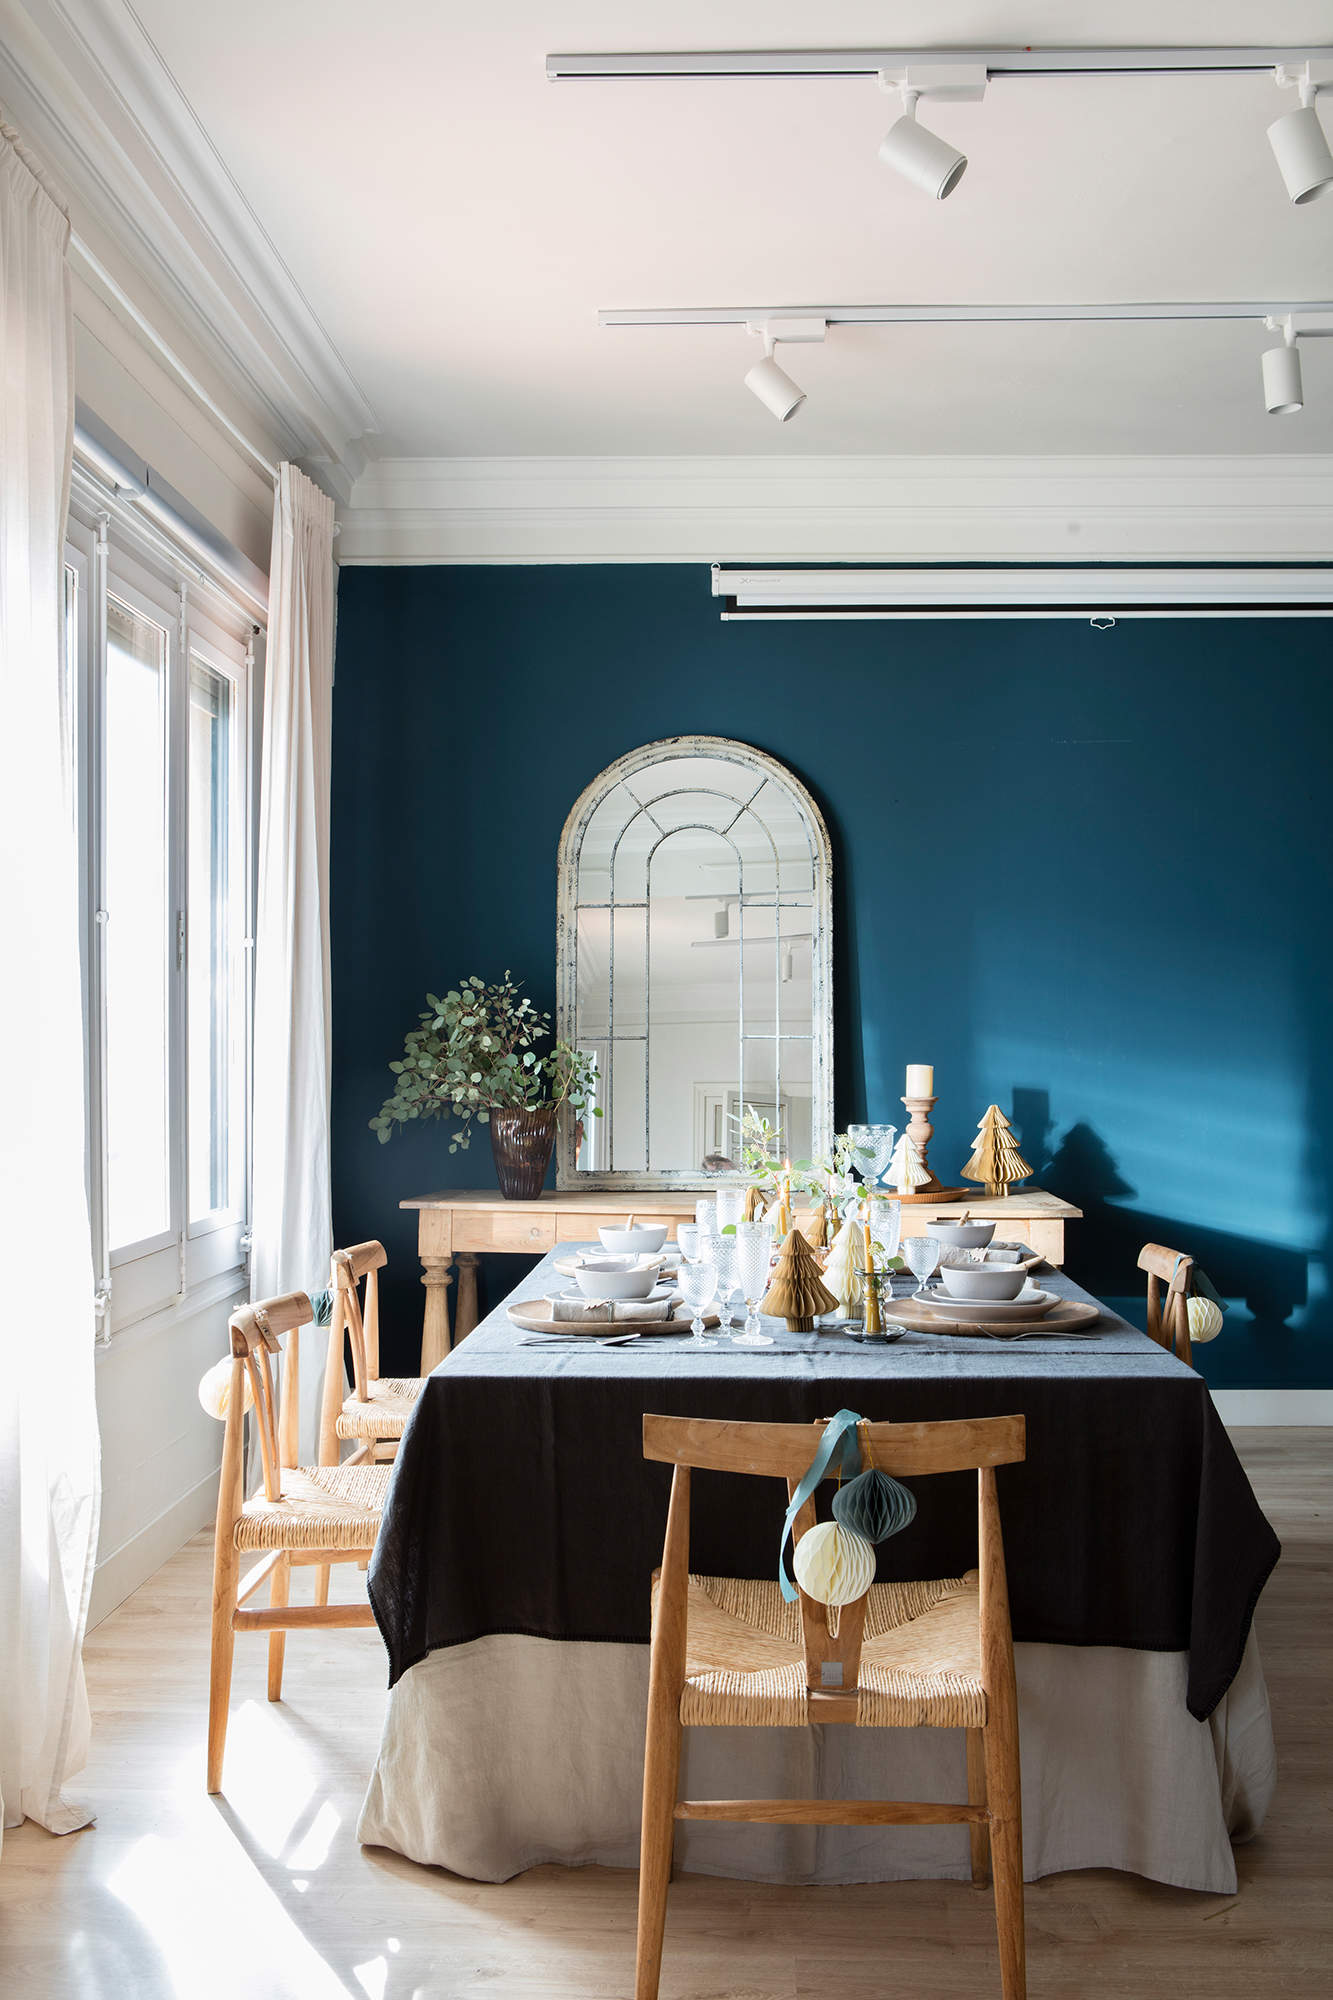 Comedor con pared pintada en azul y decoración navideña.